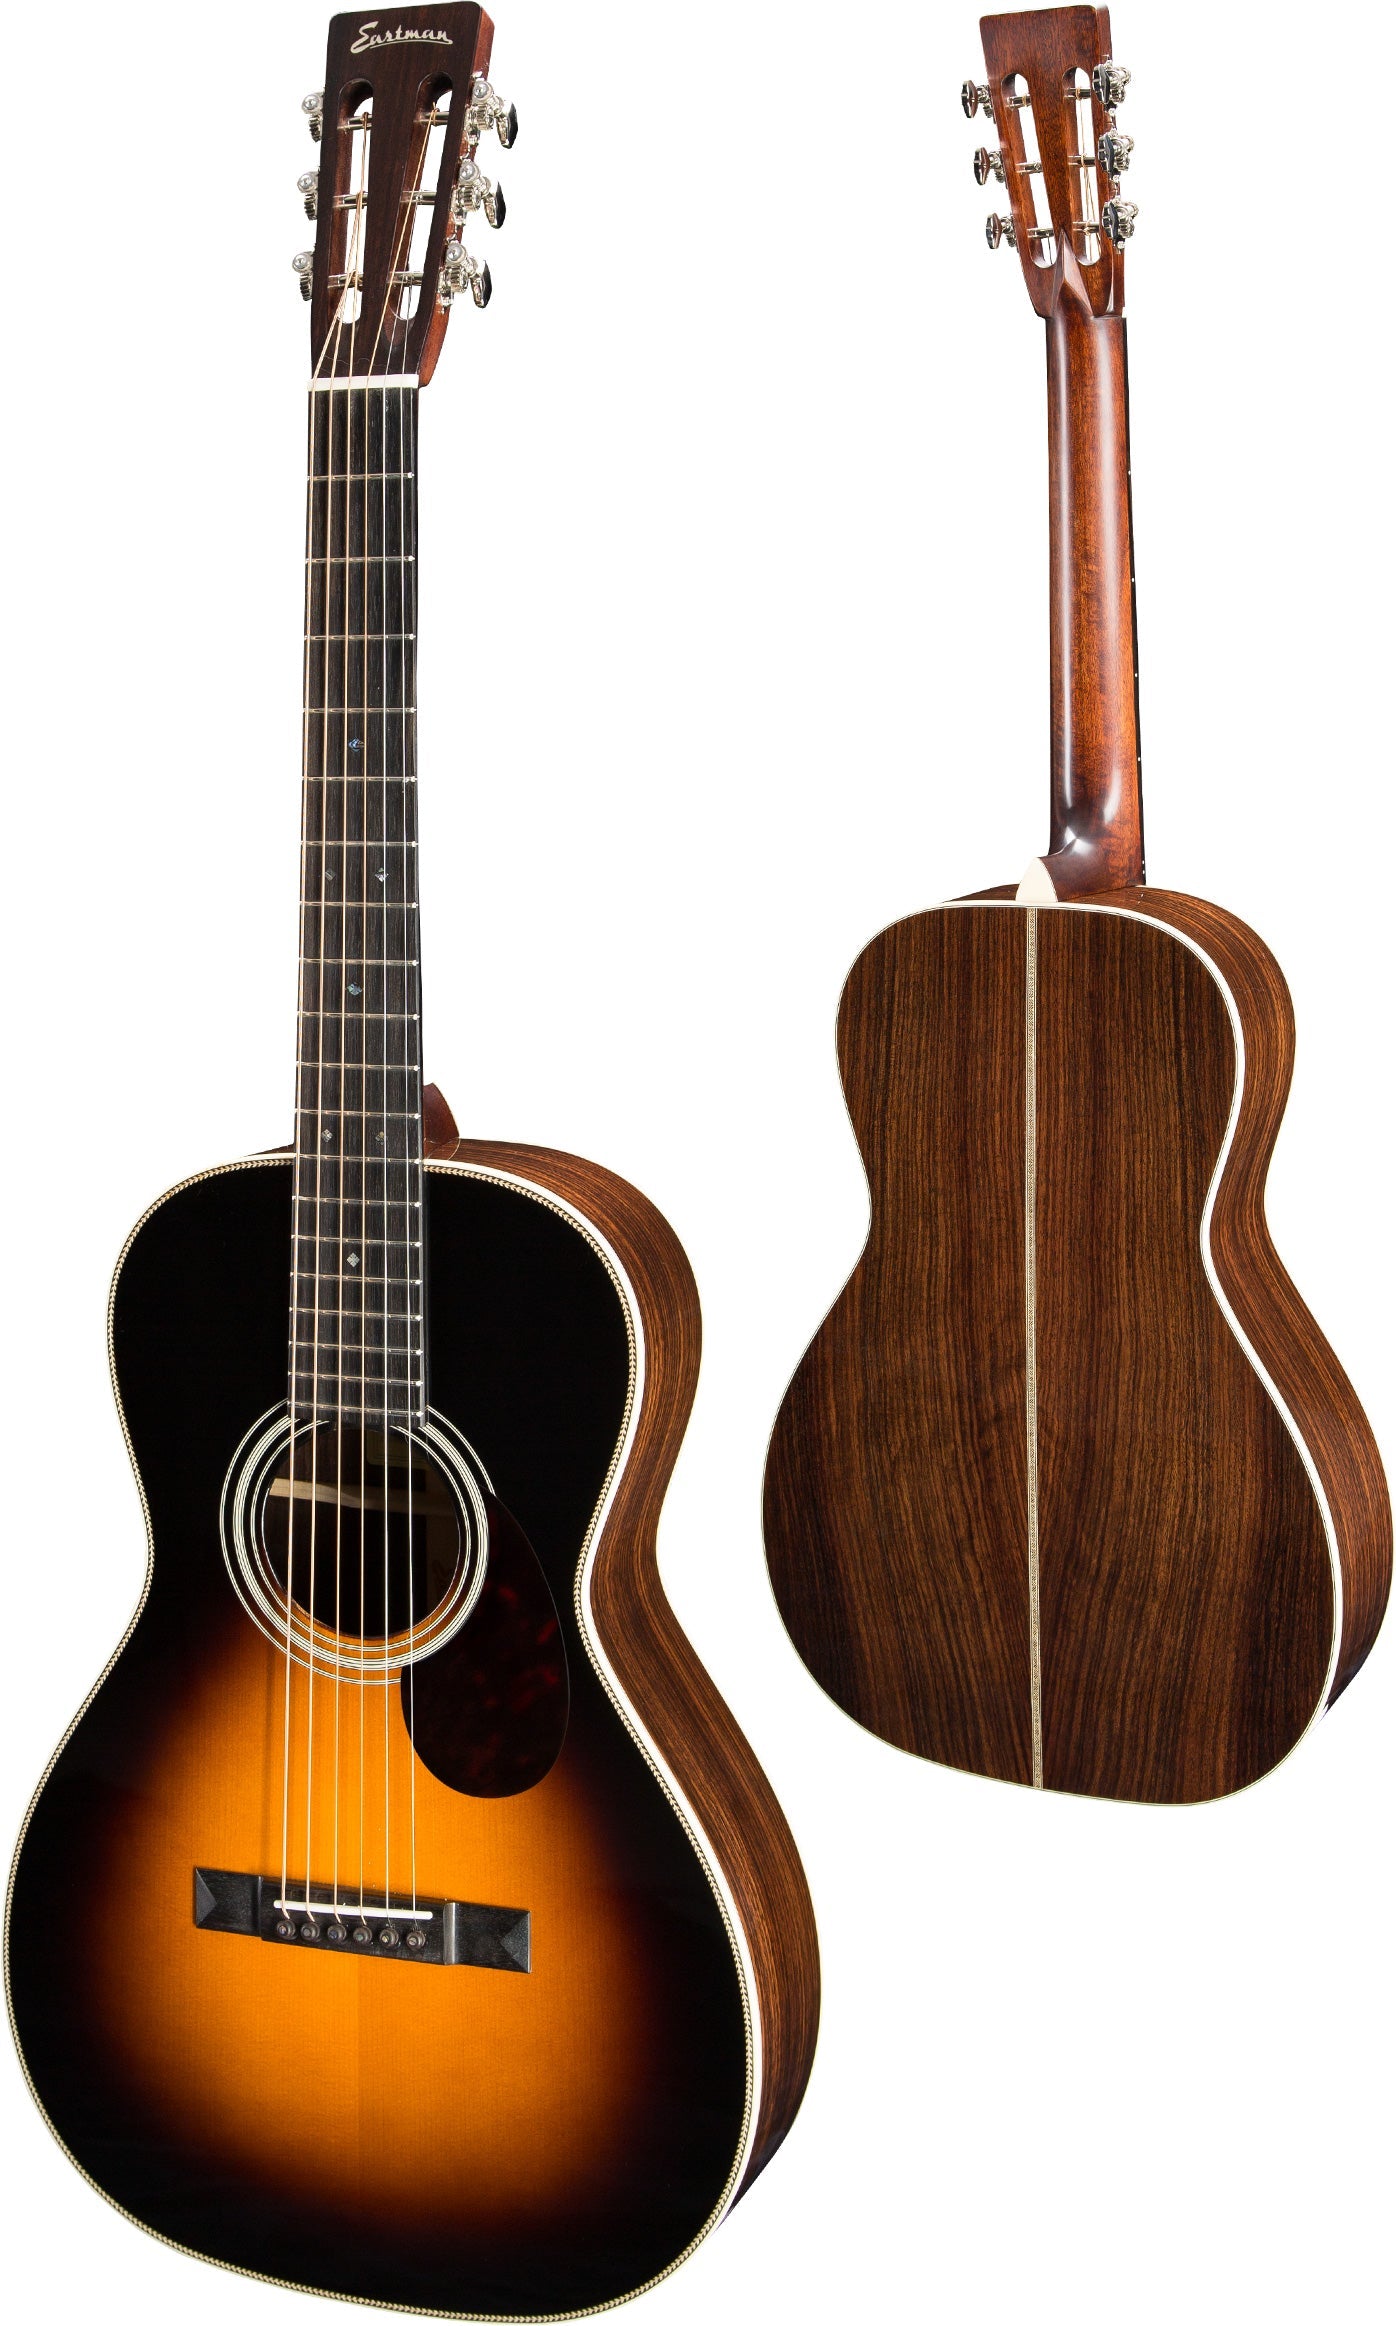 Eastman E20P-SB, Acoustic Guitar for sale at Richards Guitars.